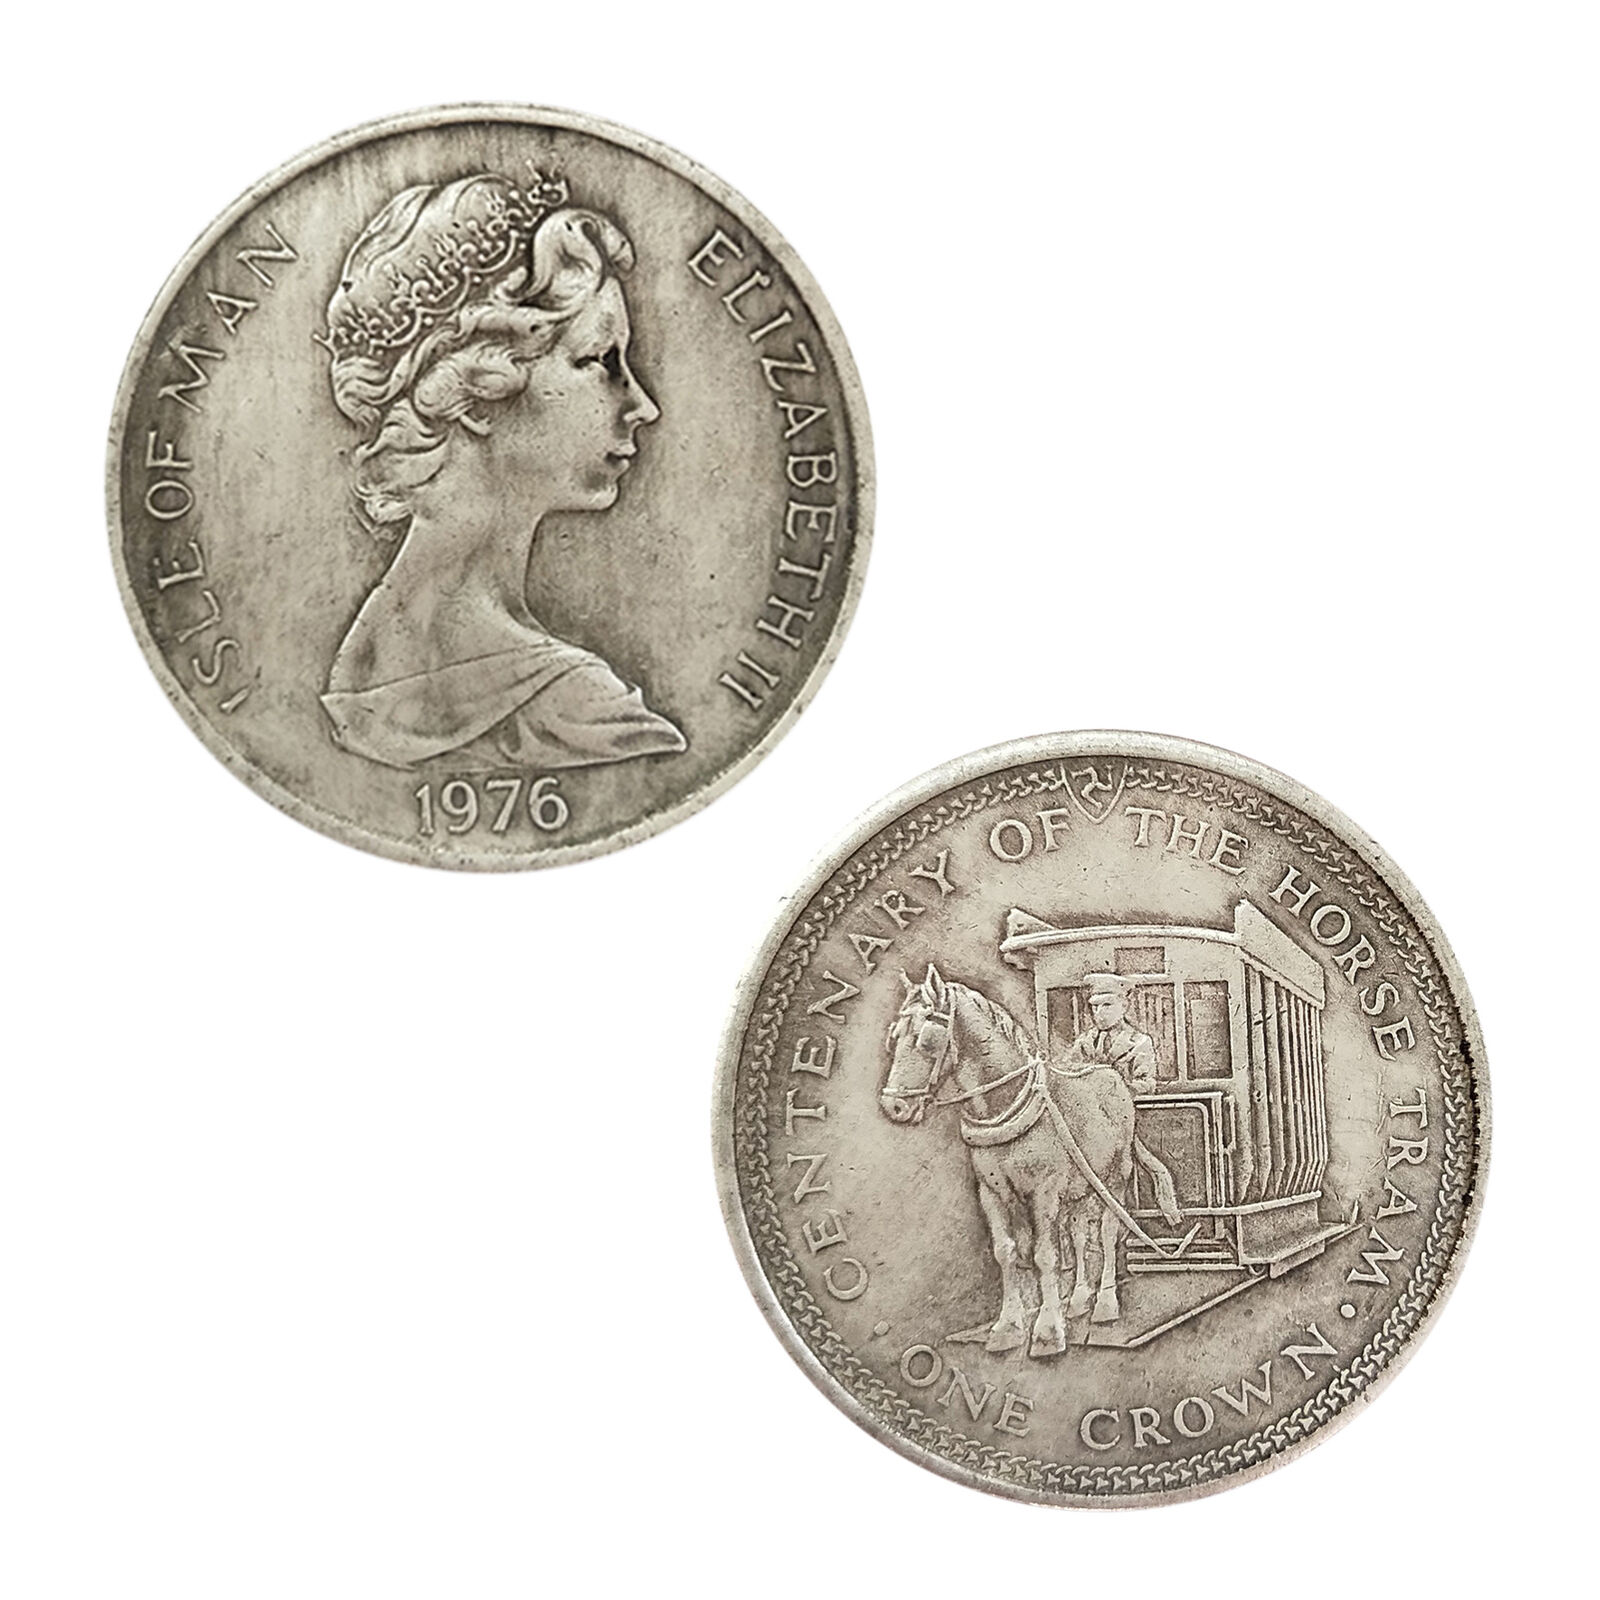 Queen Elizabeth II Souvenir Coin Queen Elizabeth II Commemorative Coin 